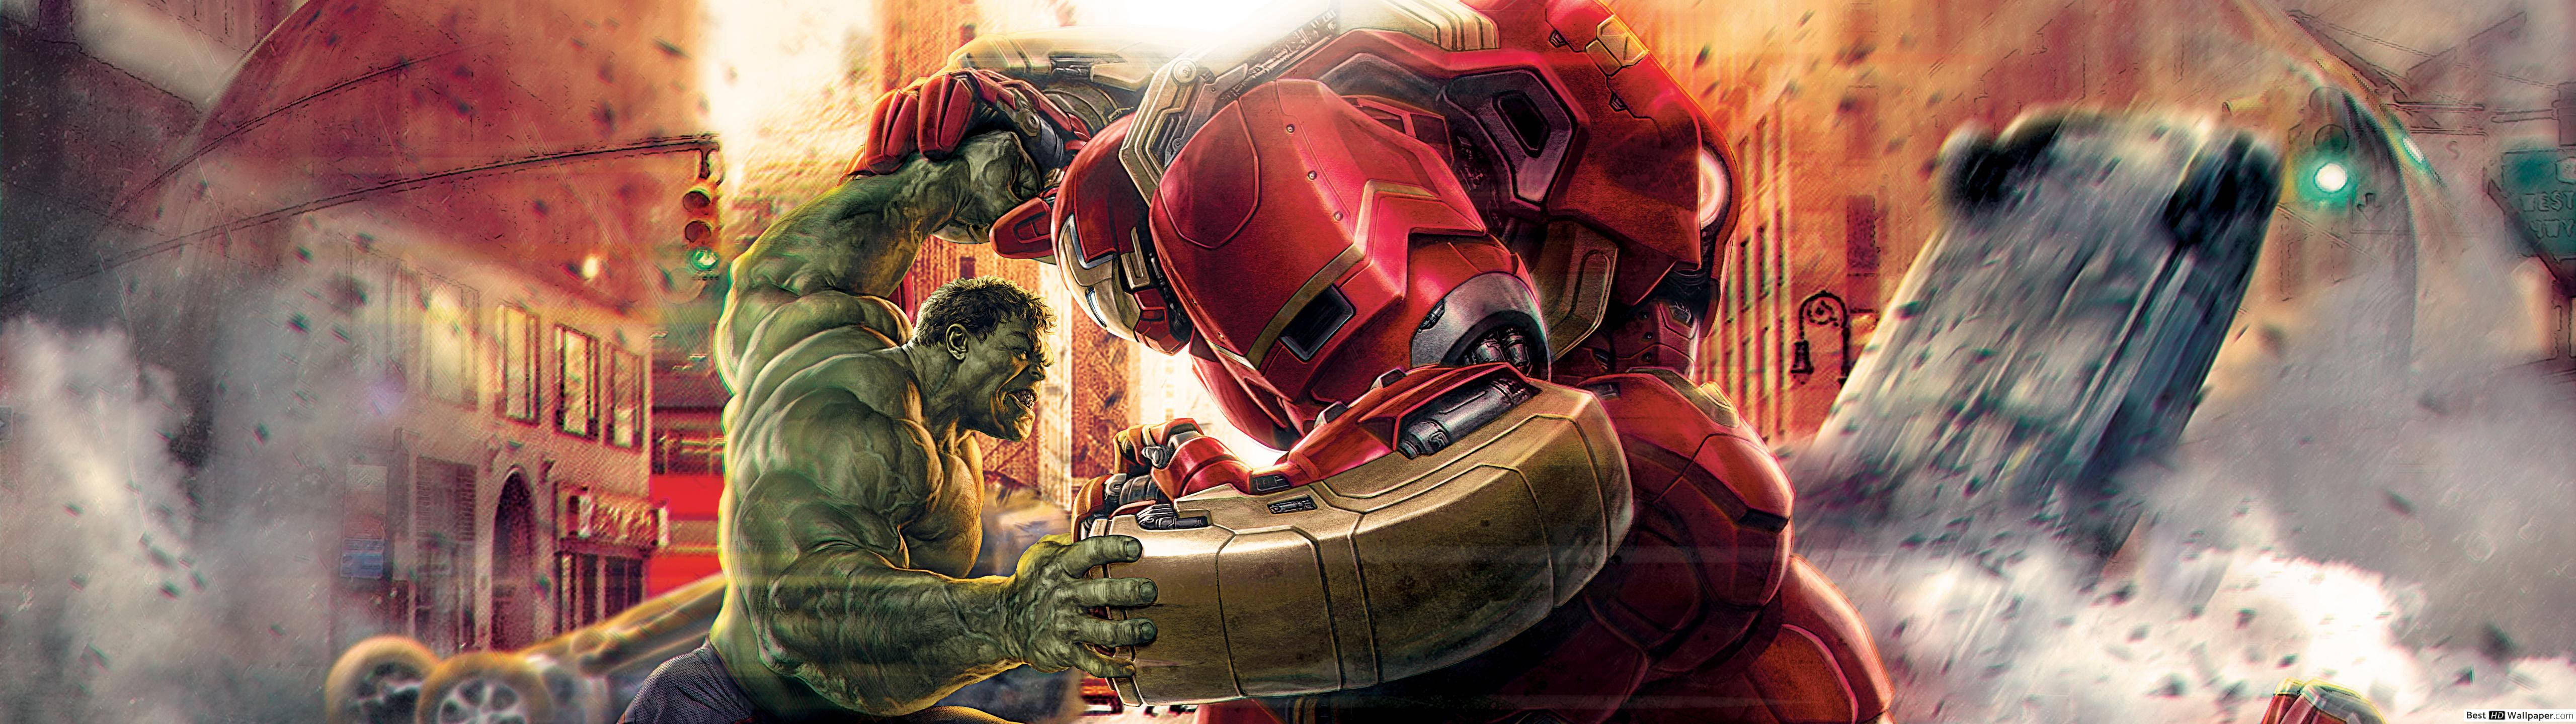 Marvel's Ironman Vs Hulk 5120 X 1440 Background